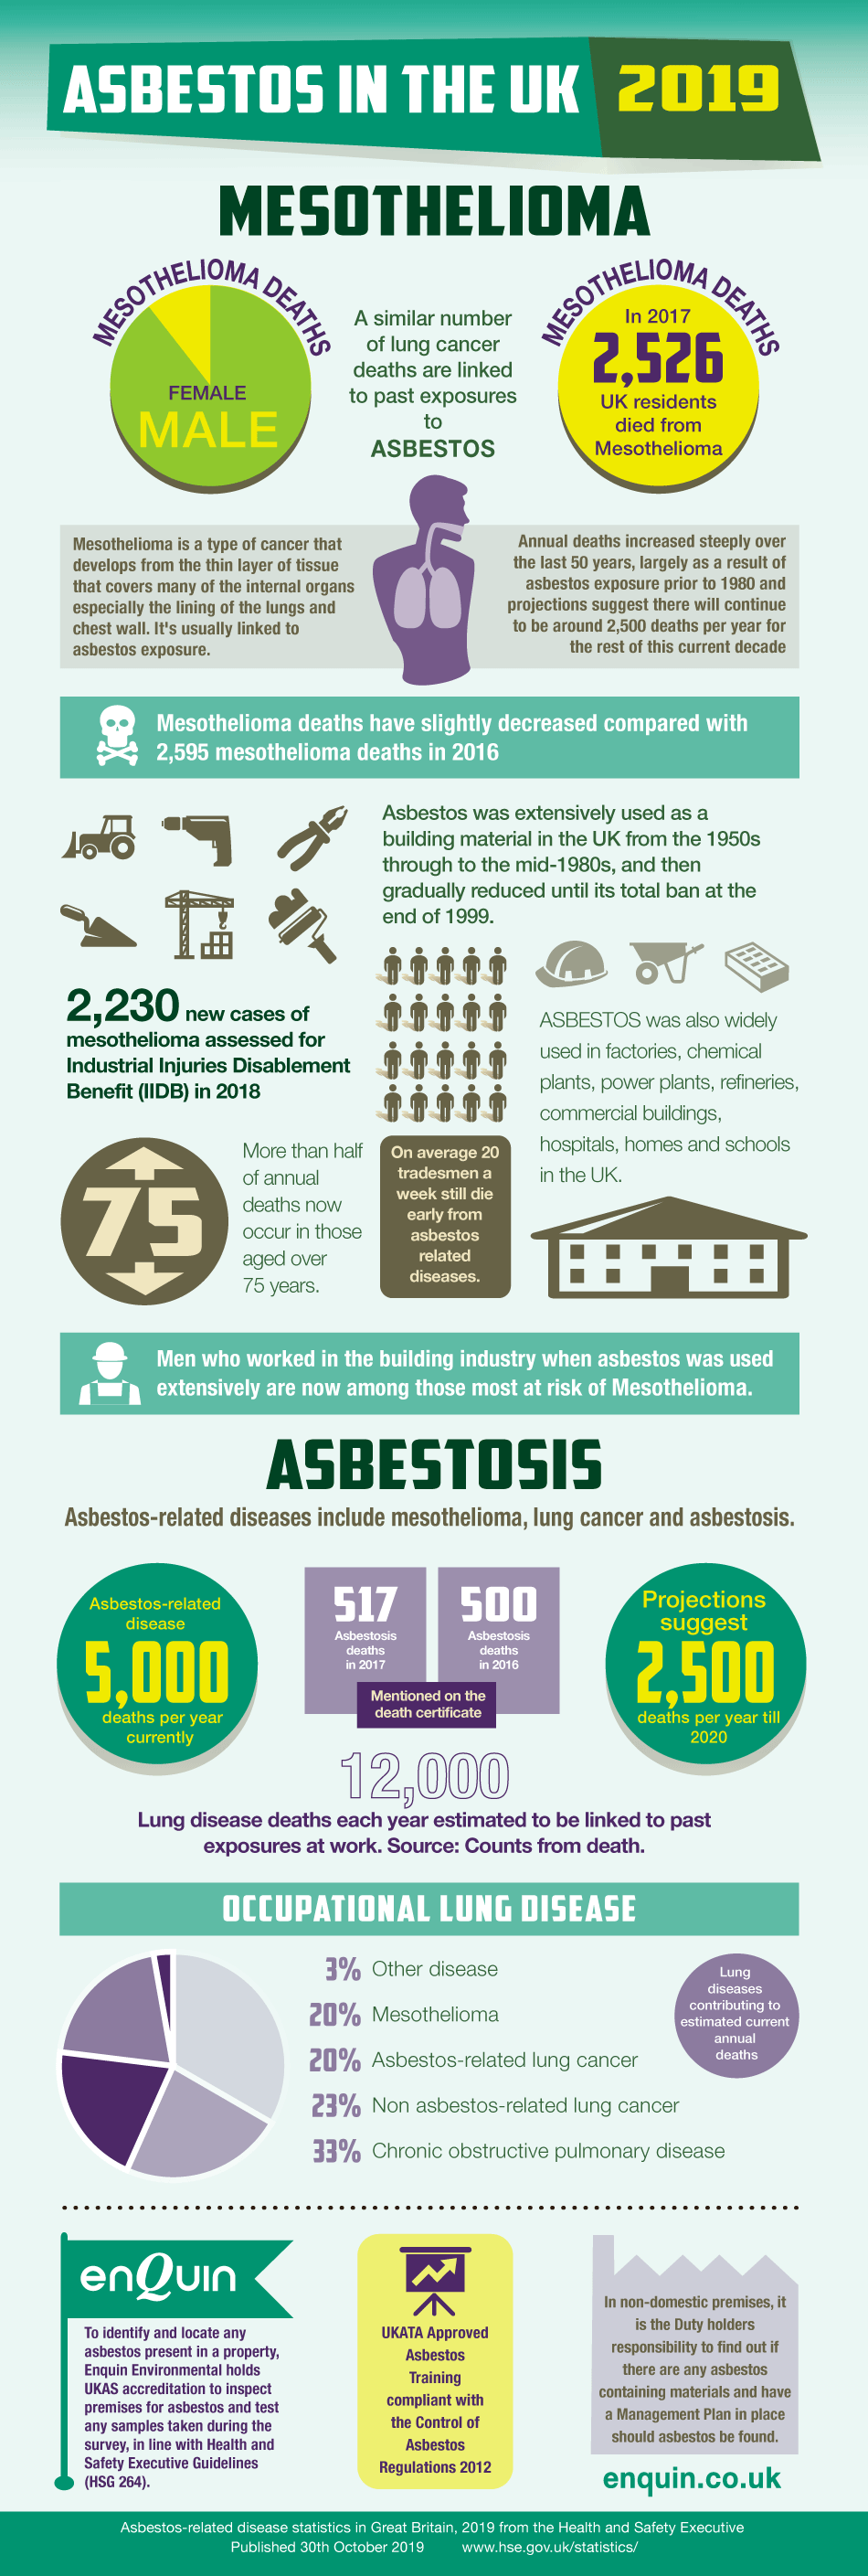 Asbestos-related disease stats